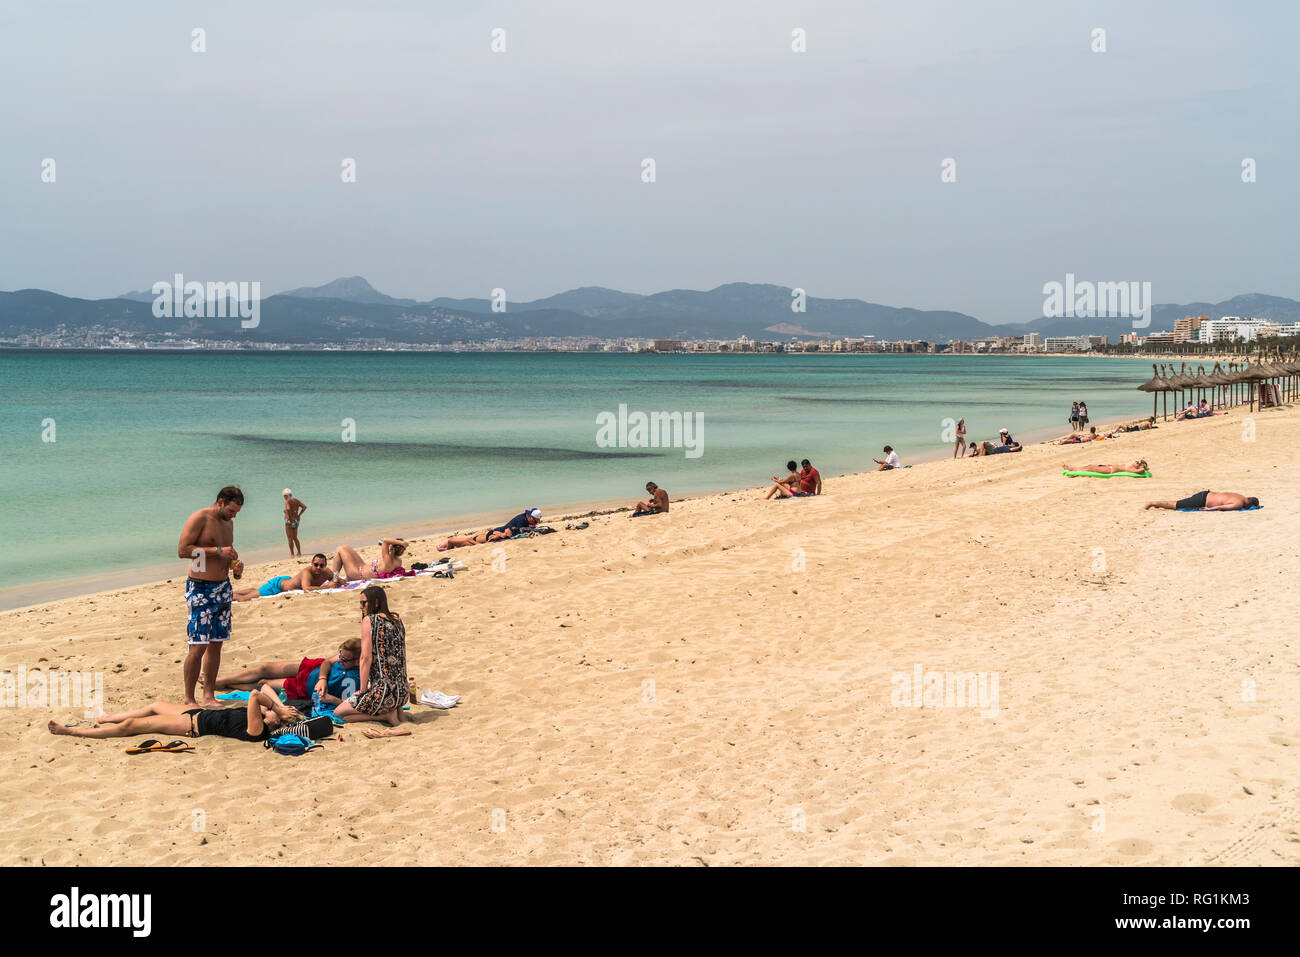 Vorsaison an der Playa de Palma, Mallorca, Balearen, Spanien  |  off season at Playa de Palma, Majorca, Balearic Islands, Spain, Stock Photo